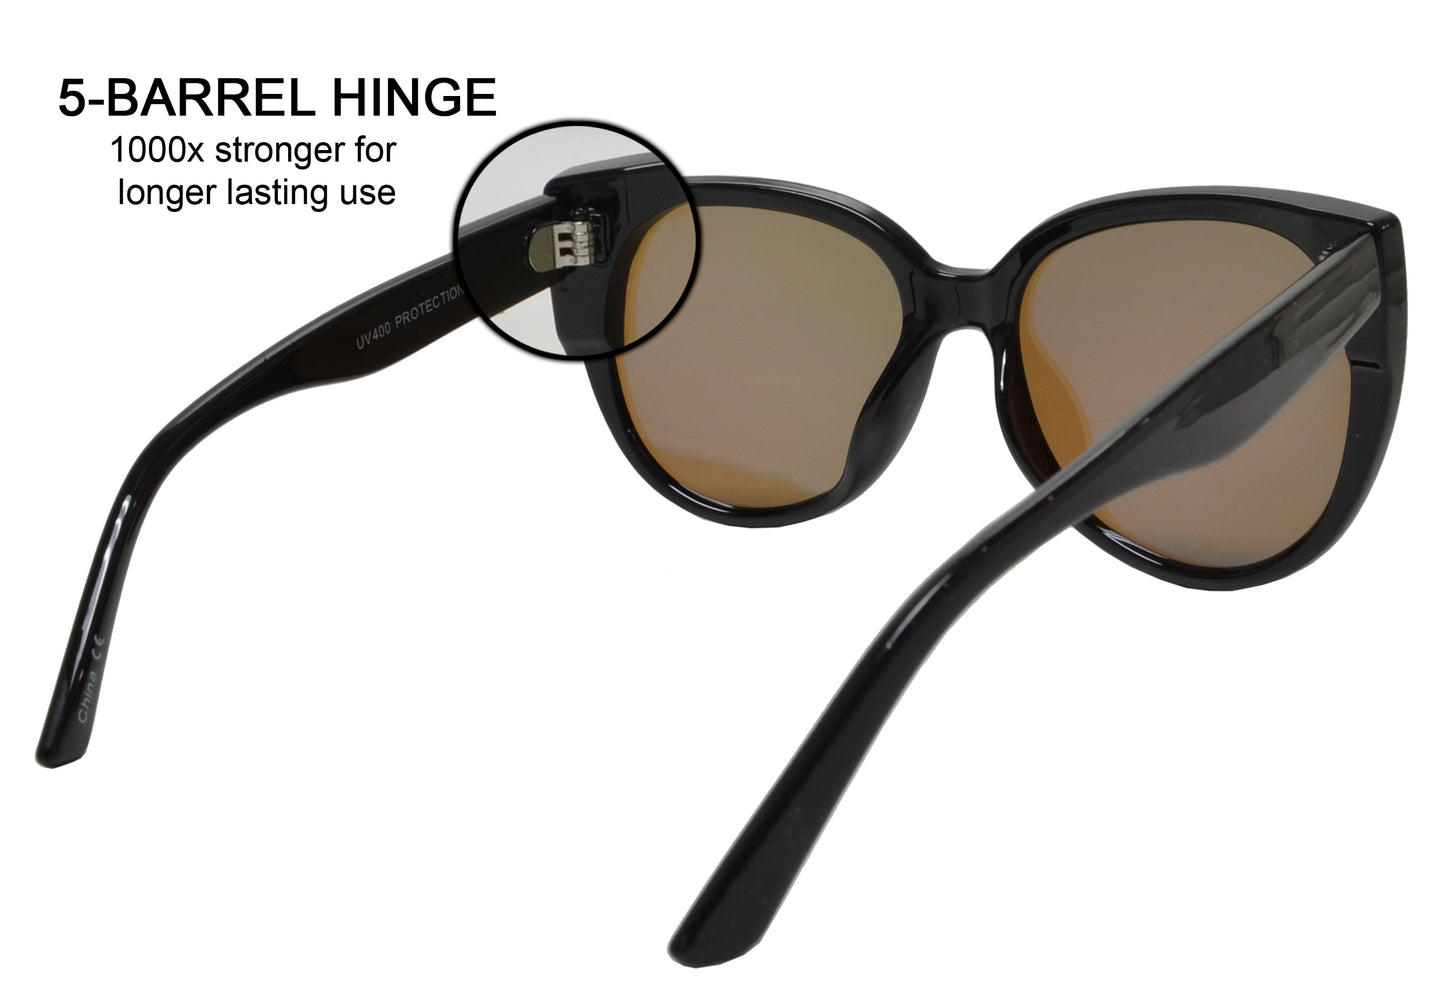 8782 - Women's Assorted Oversize Cat Eye Sunglasses